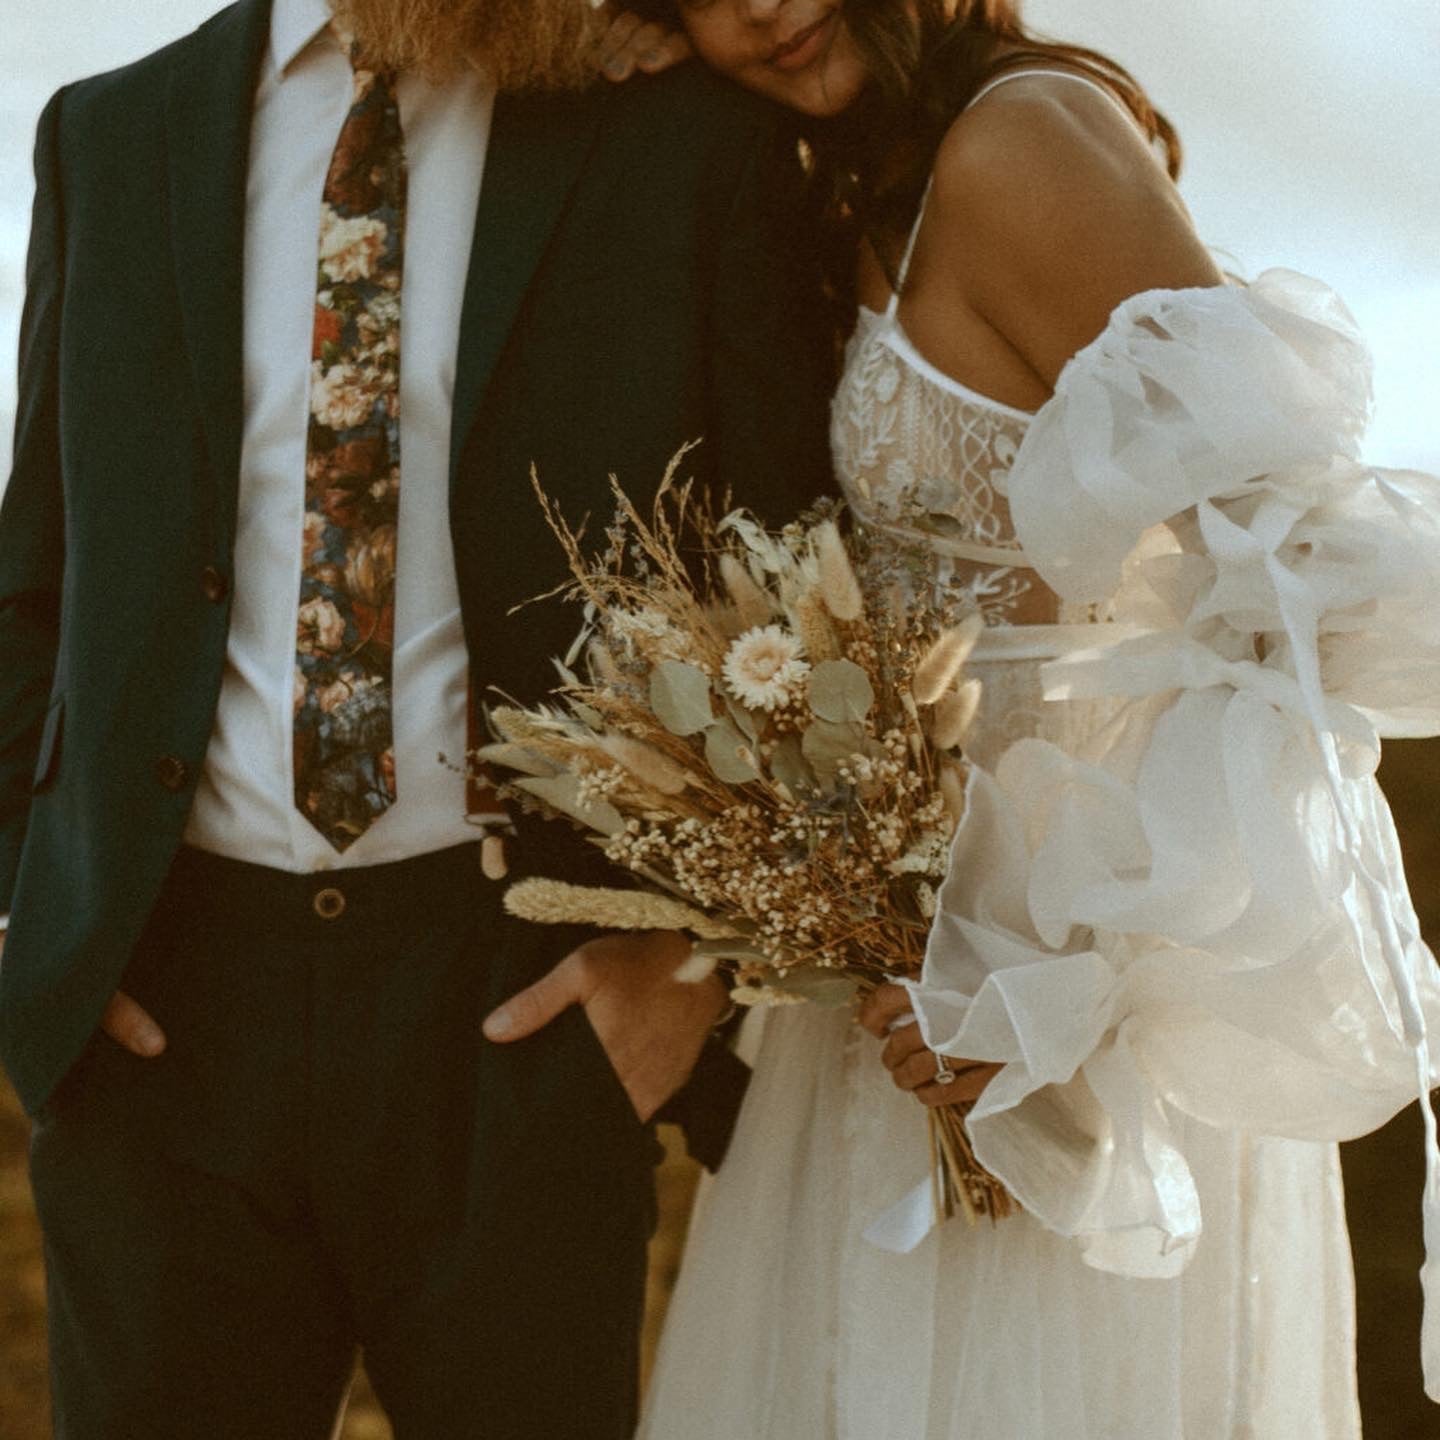 Neckties floral tie floral ties suit and tie accessories for weddings styled shoot